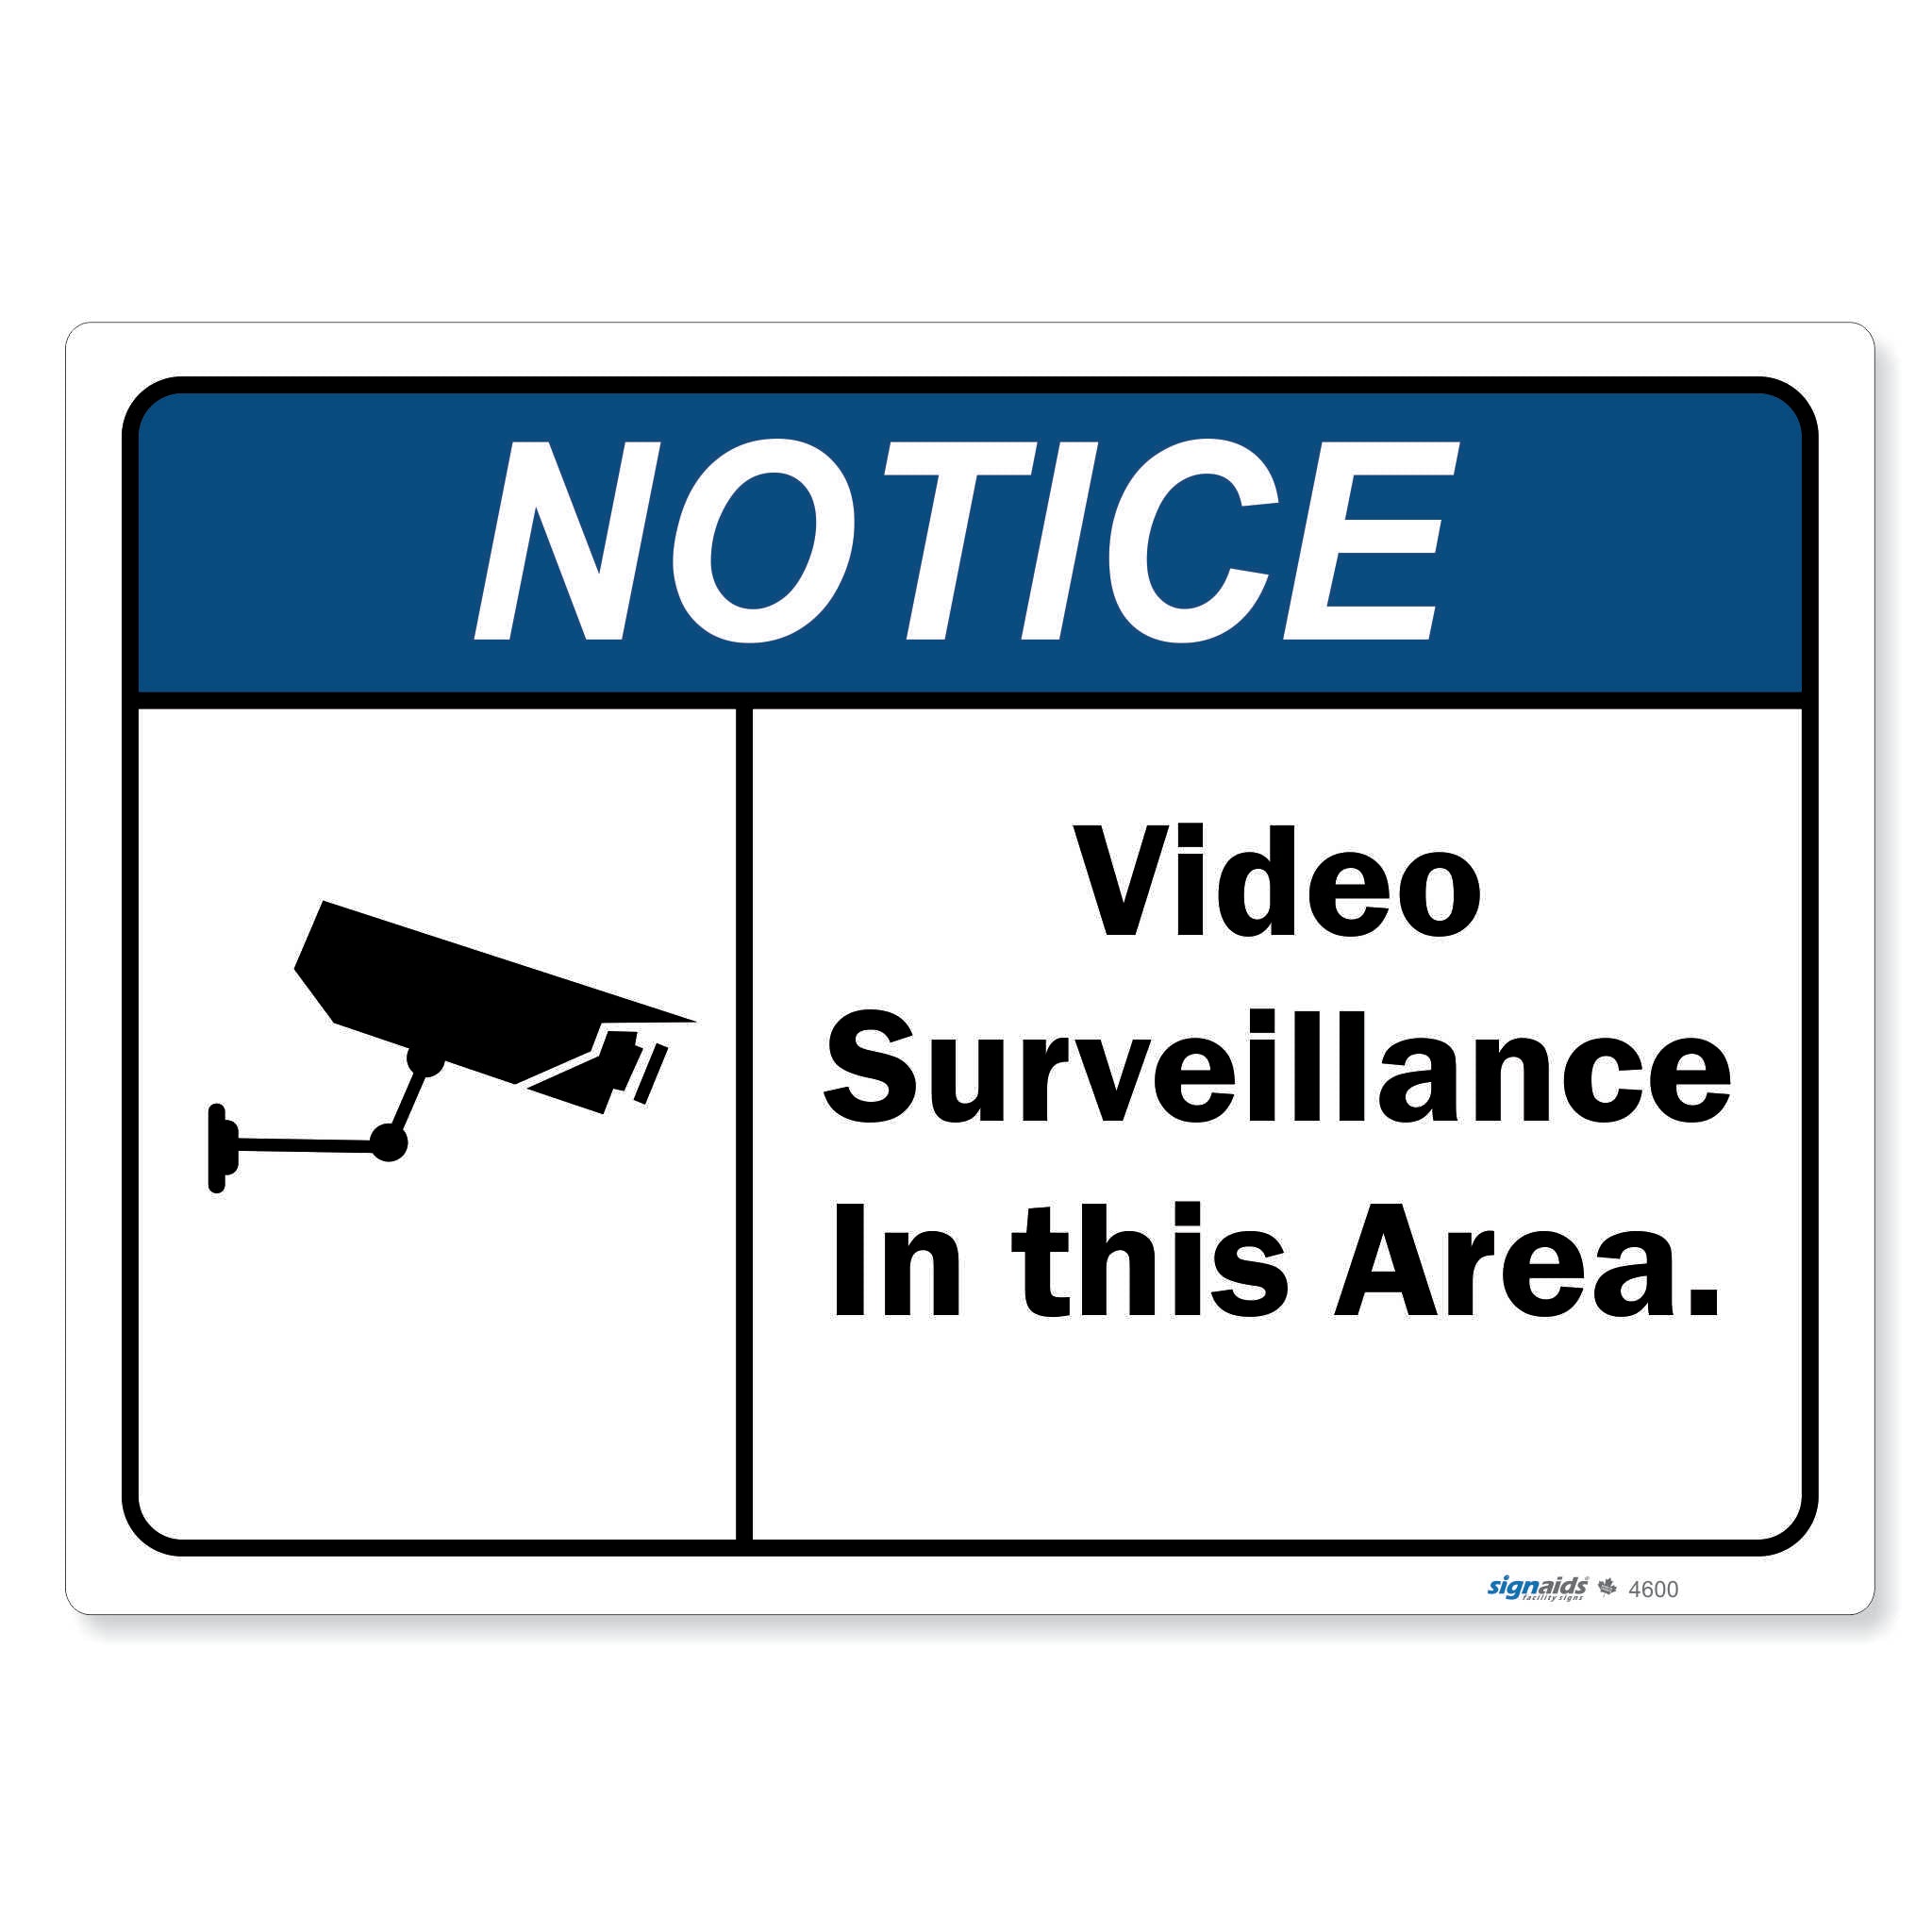 Notice Video Surveillance